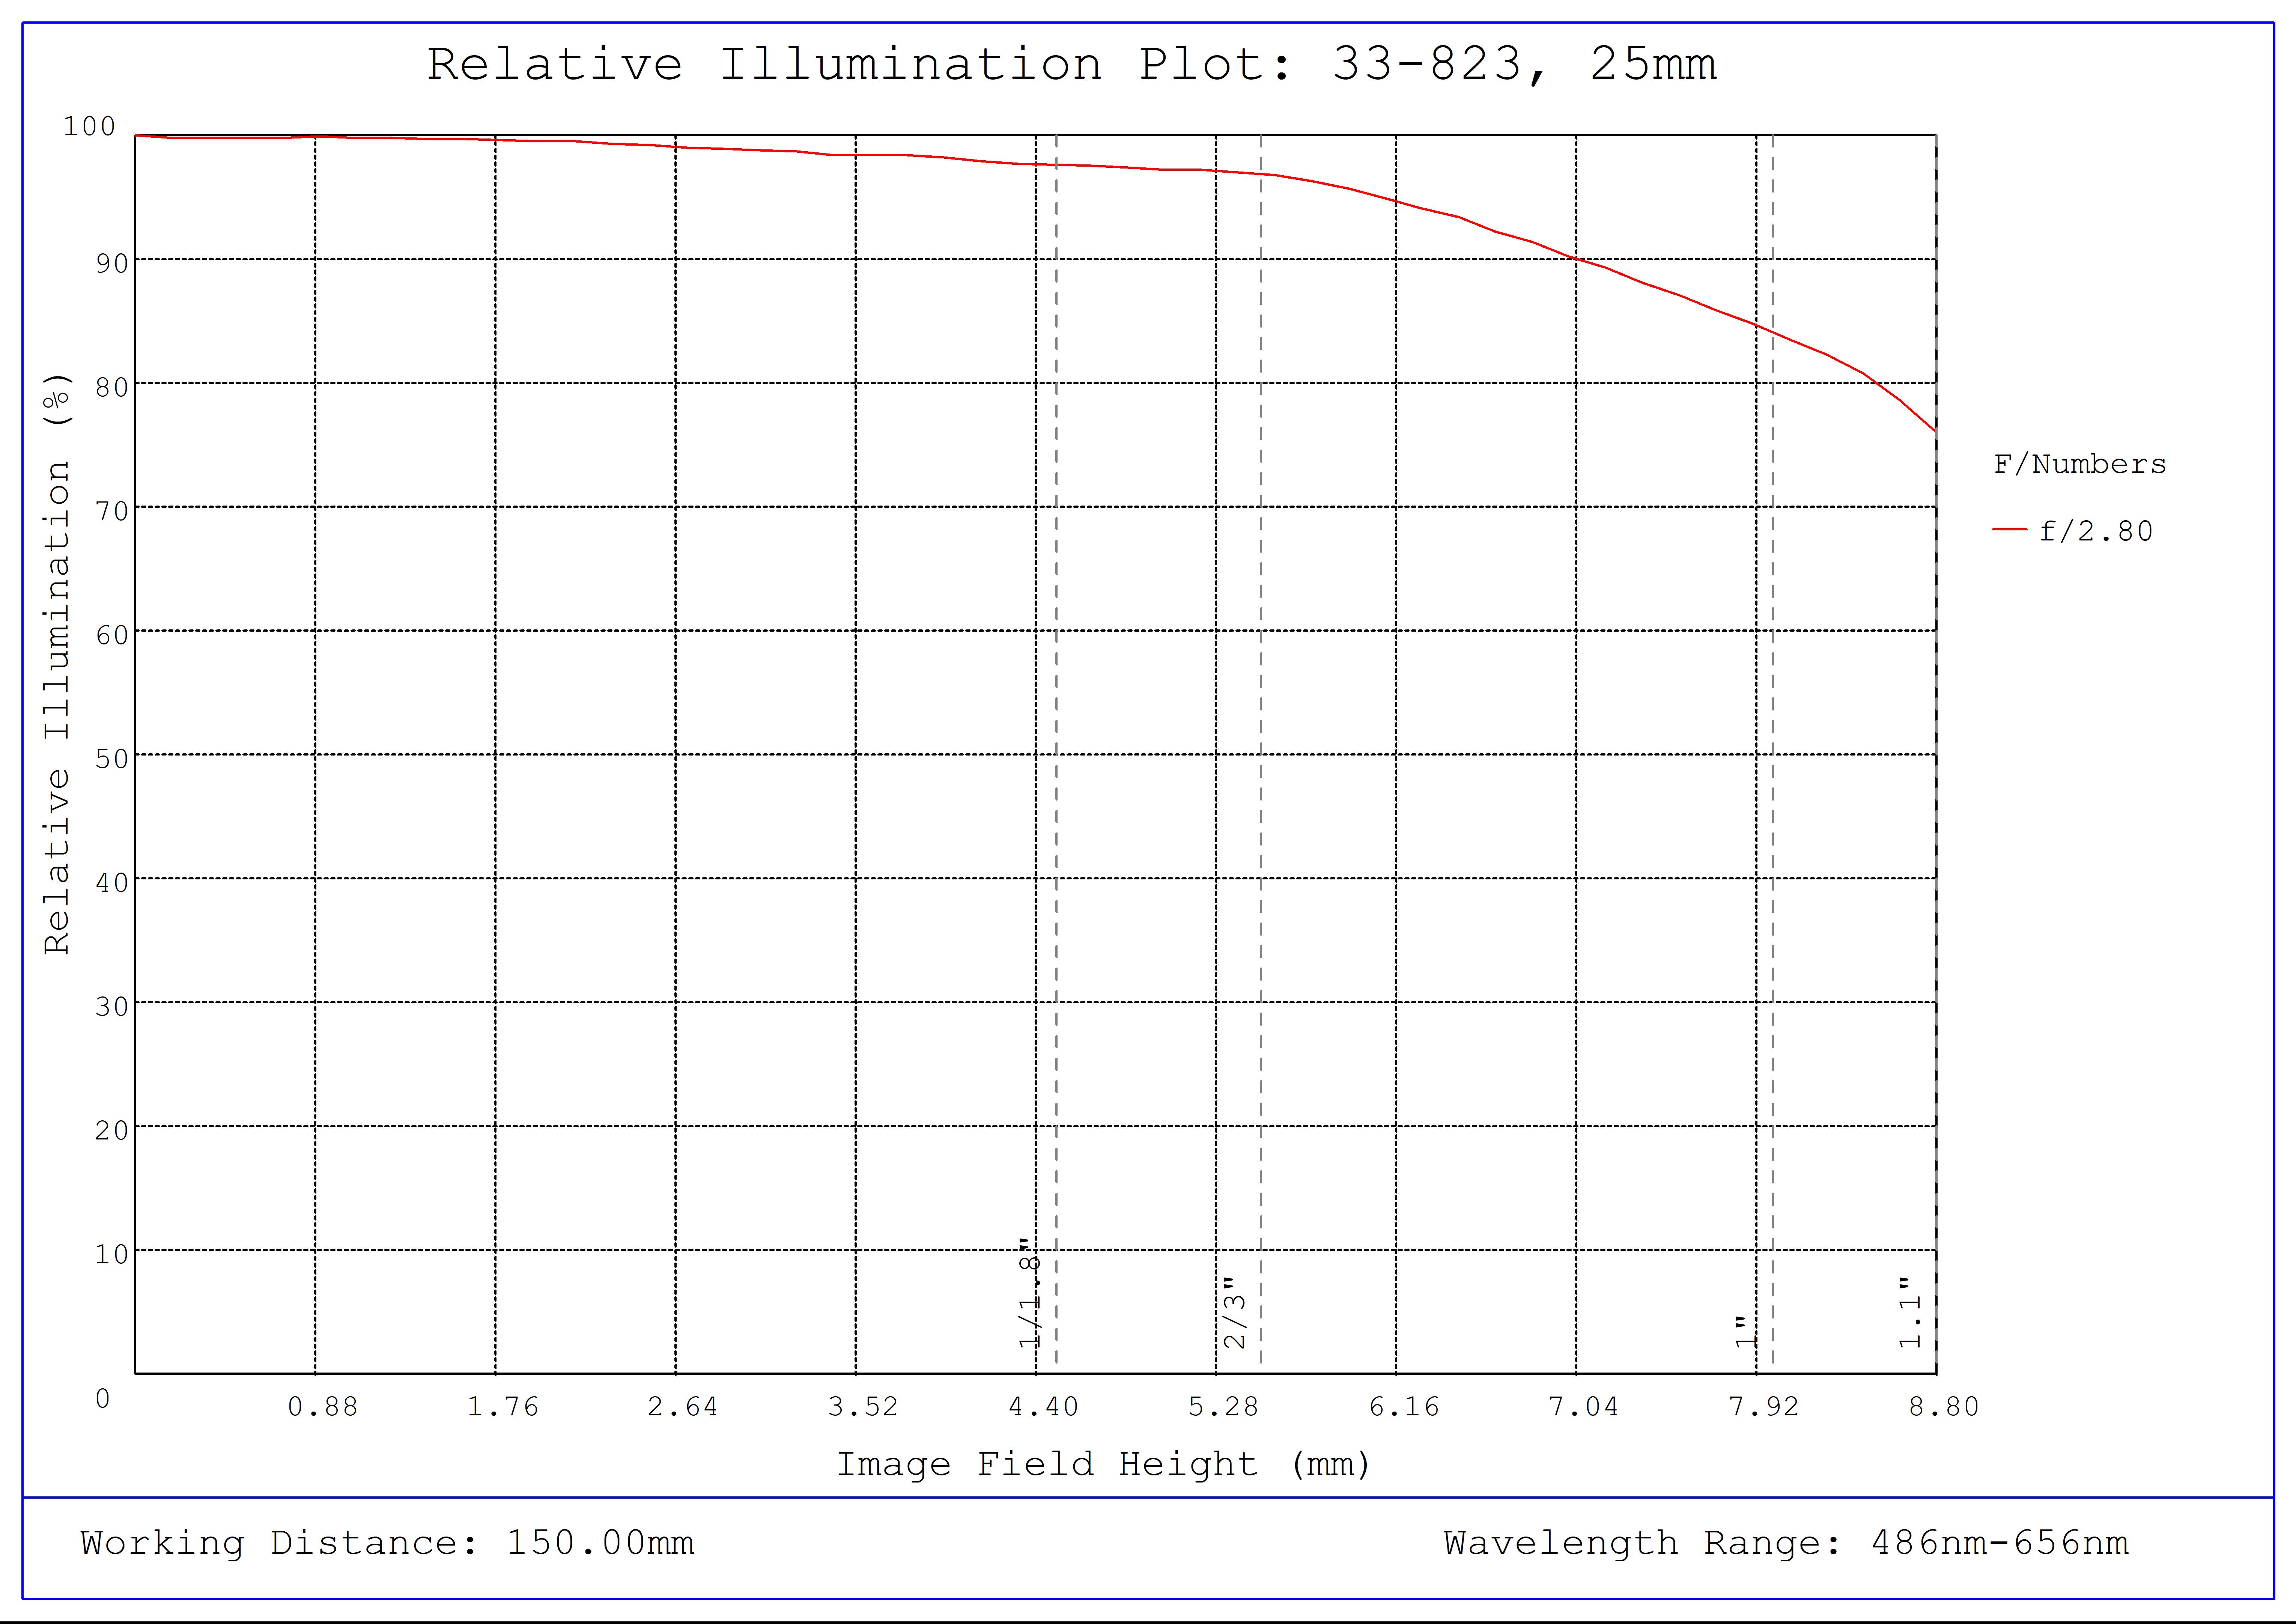 #33-823, 25mm f/2.8, HPi Series Fixed Focal Length Lens, Relative Illumination Plot